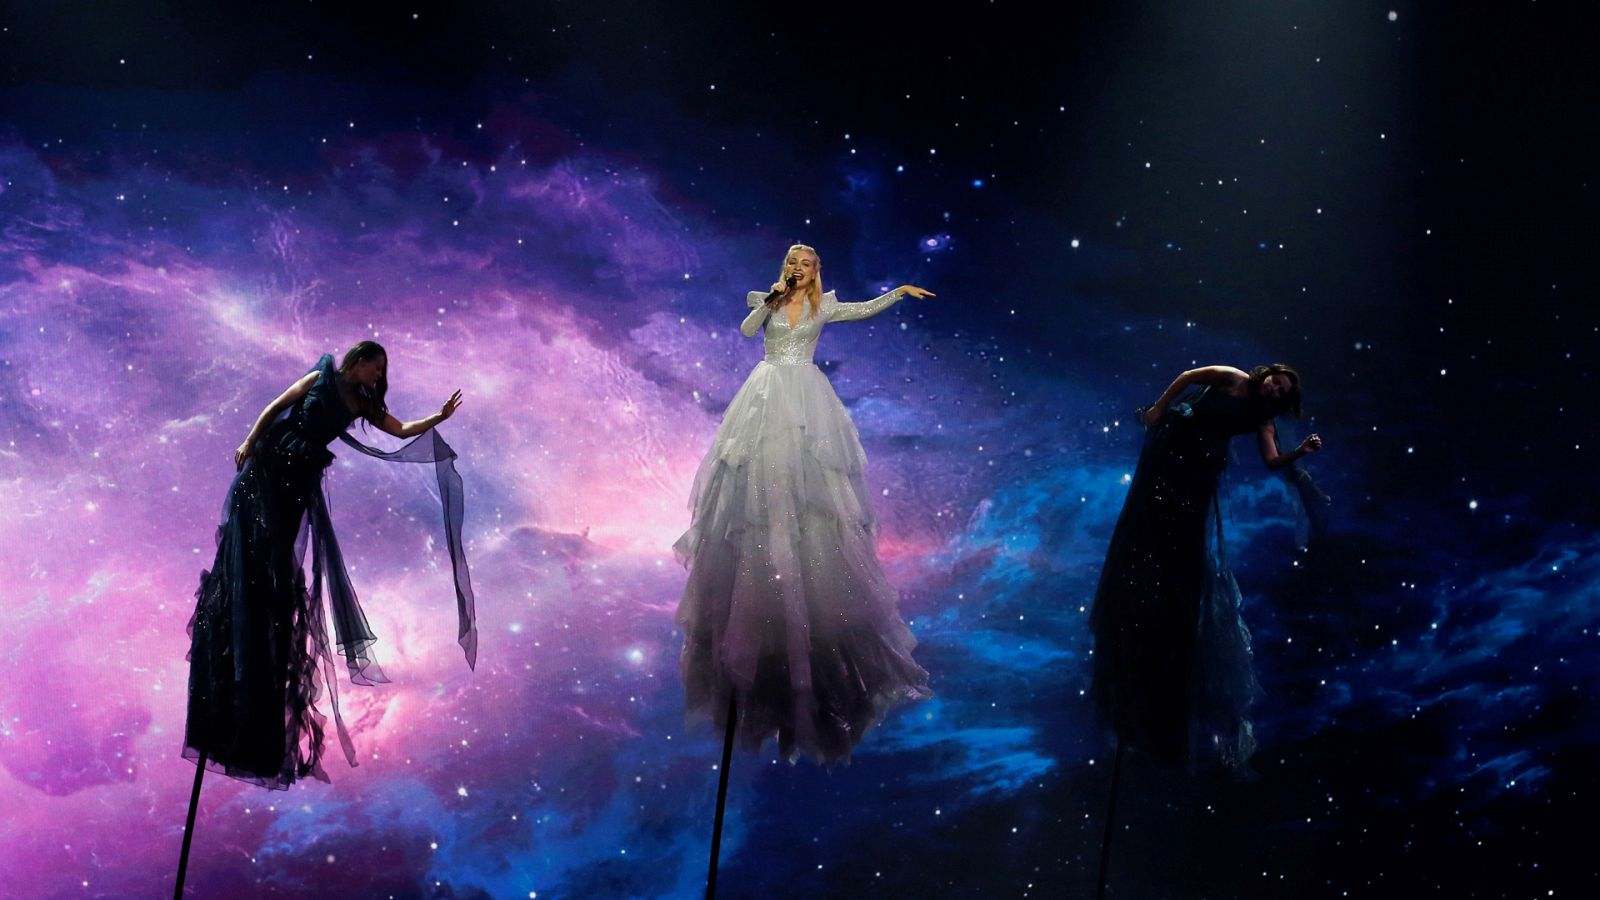 Eurovisión 2019 - Australia: Kate Miller-Heidke canta "Zero Gravity" en la final